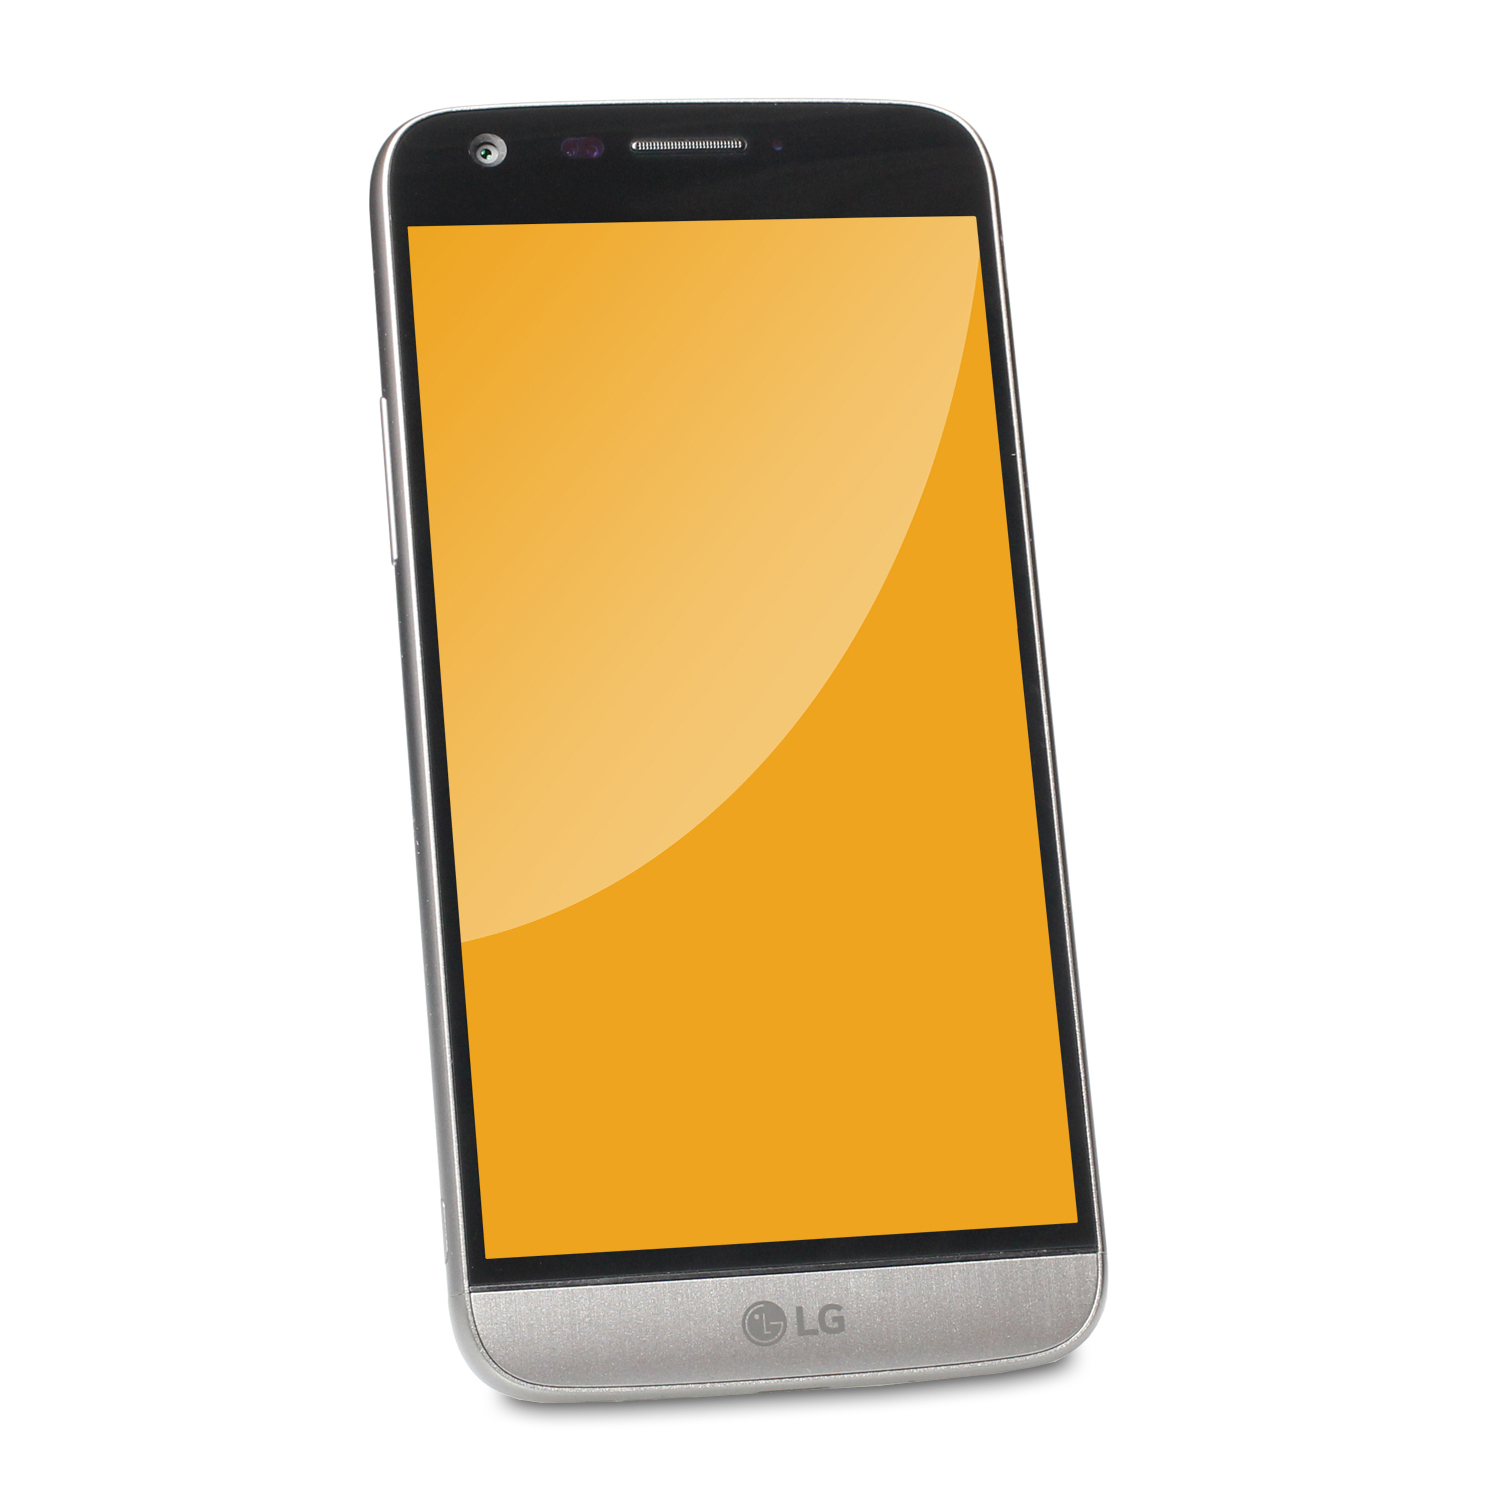 G5 LG-H850 Gold 32 GB